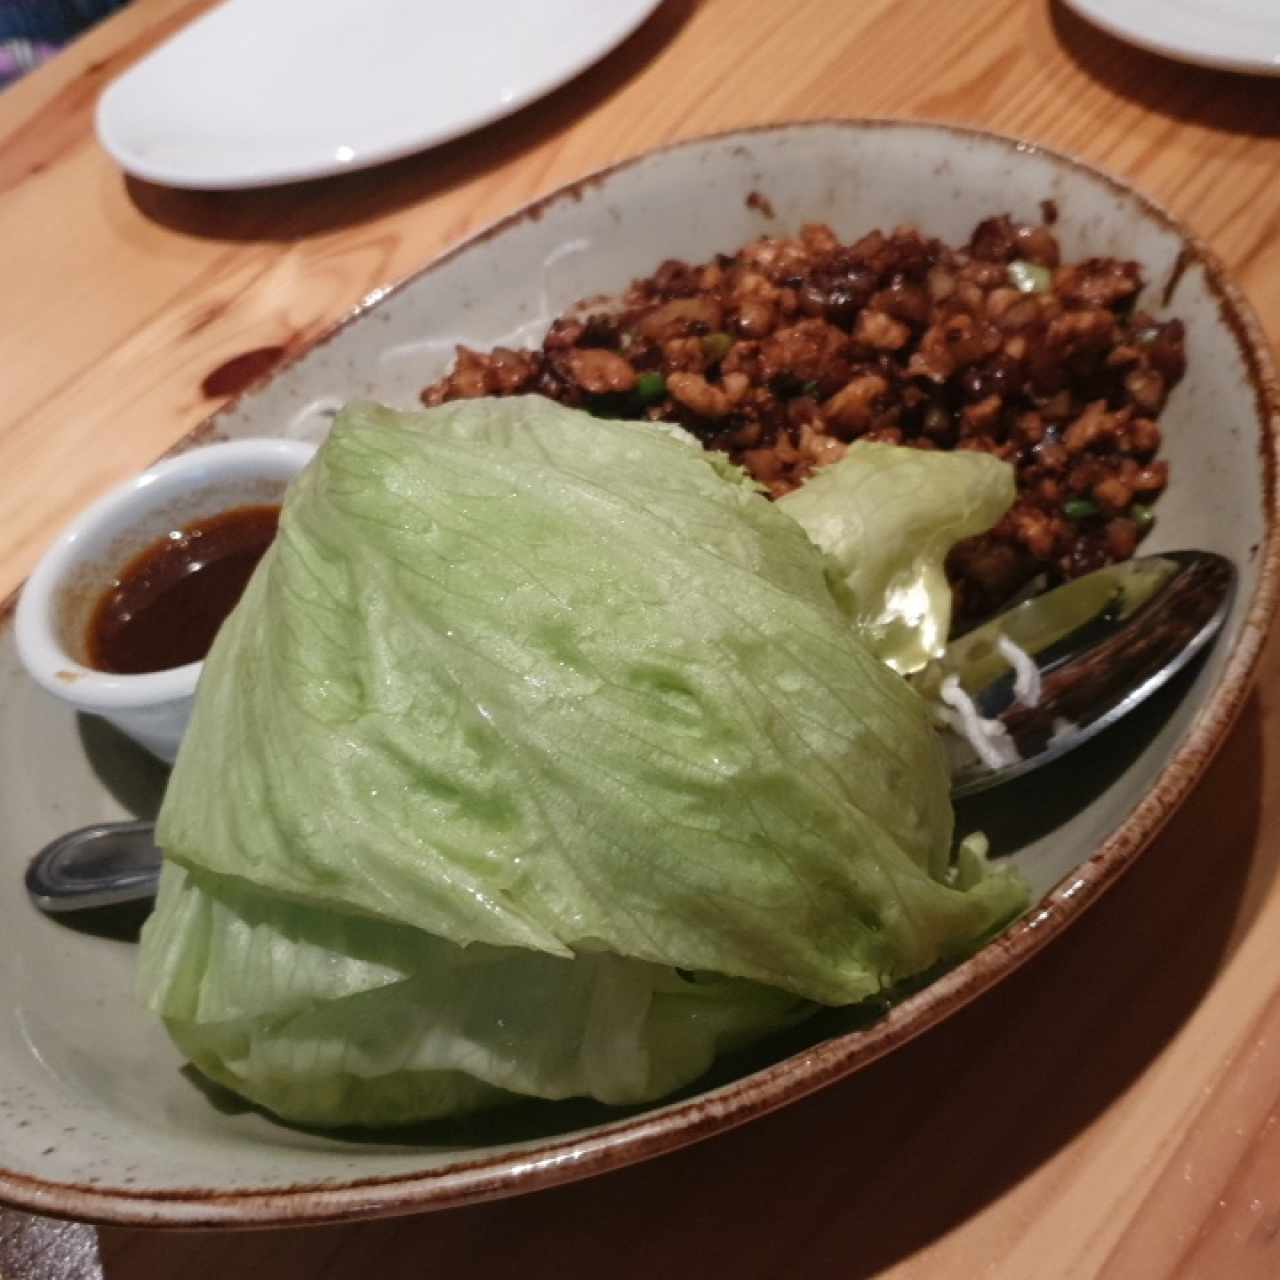  chang lettuce wraps